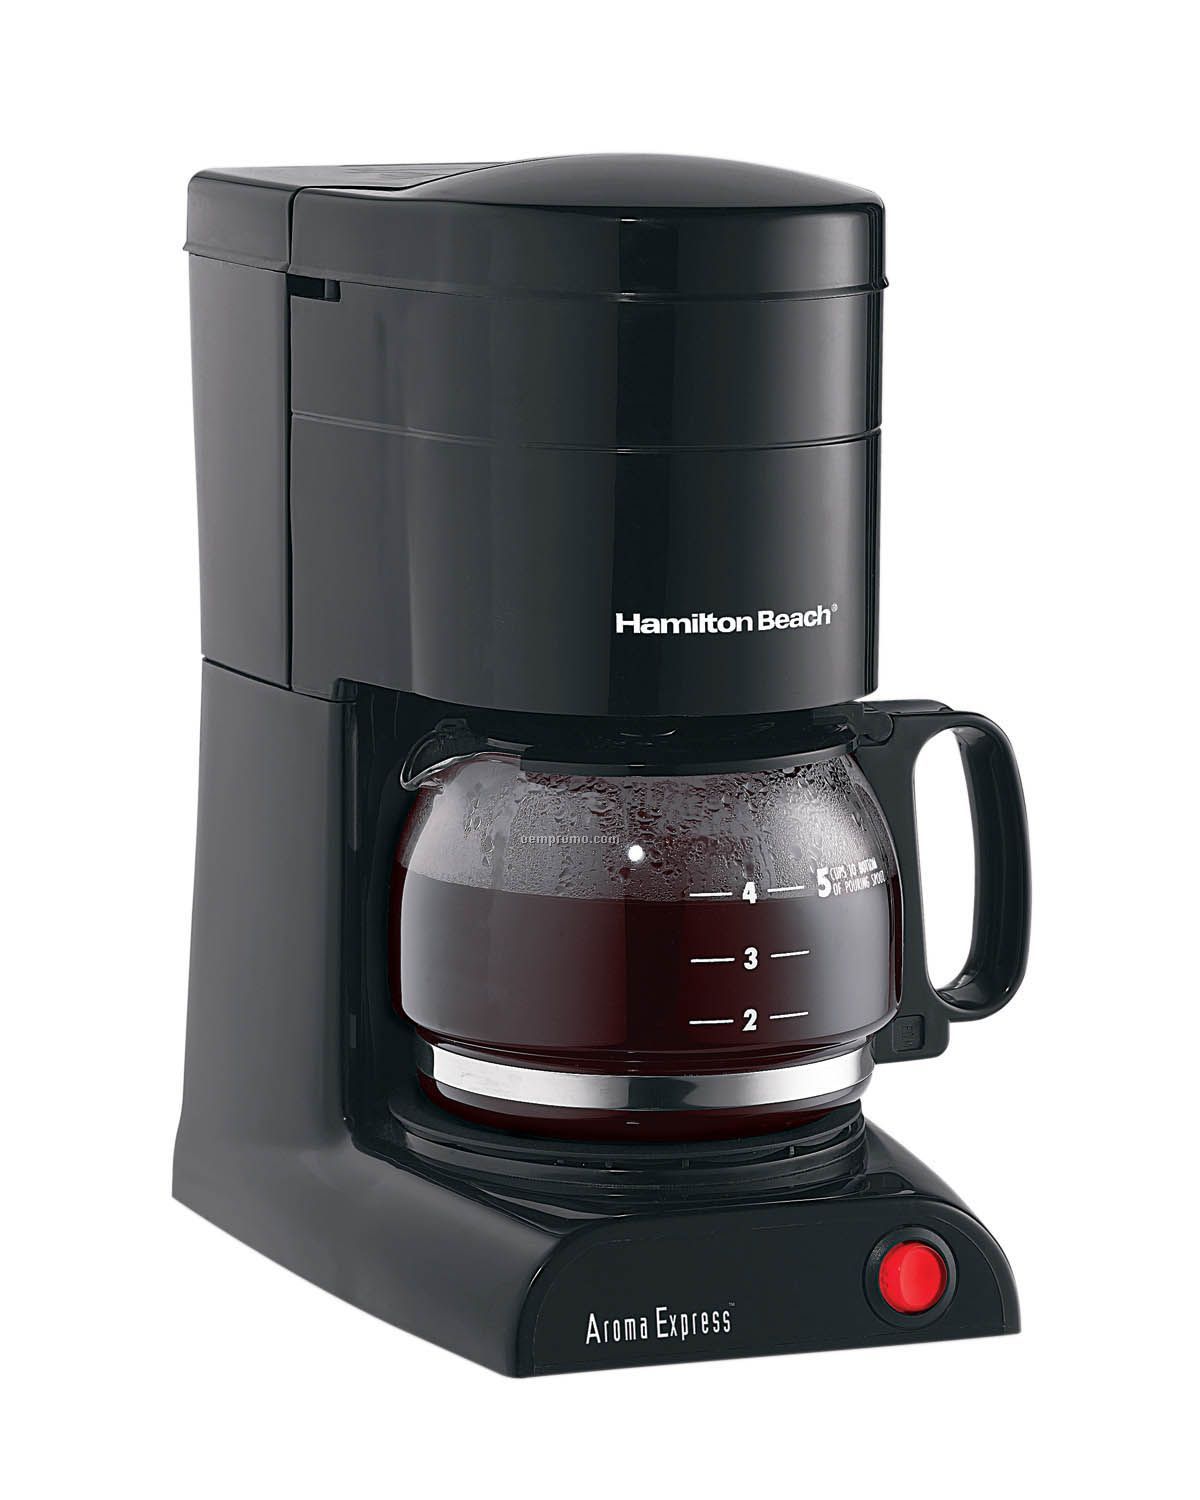 Hamilton Beach Express 5-cup Coffeemaker (Black)